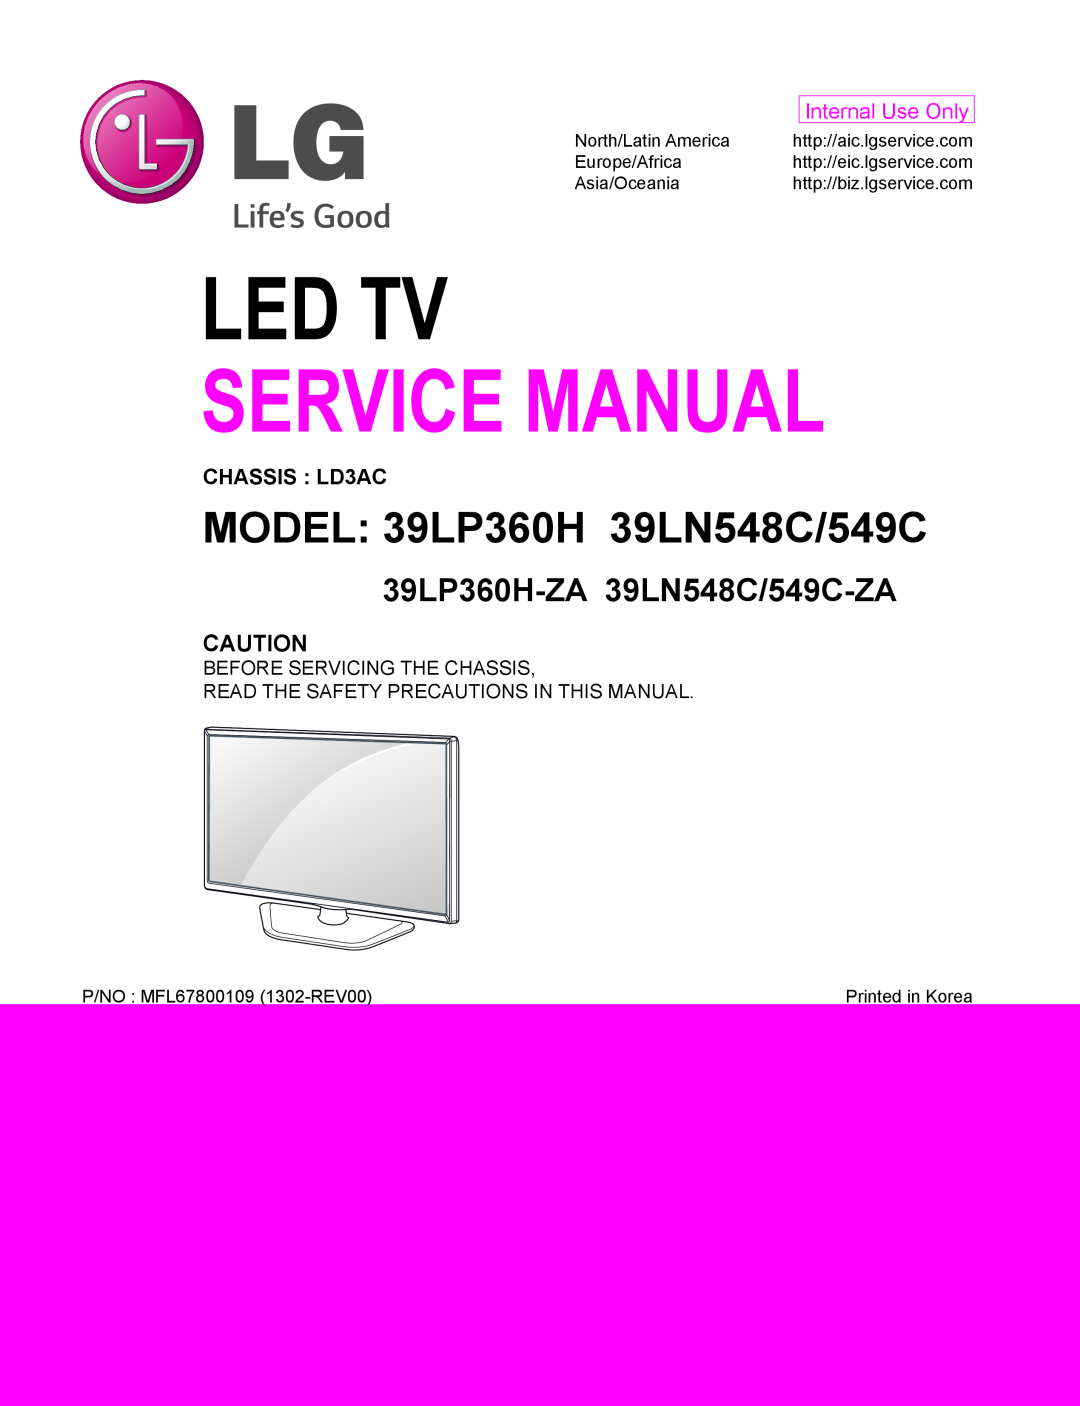 LG Electronics service manual Led Tv, Service Manual, MODEL 39LP360H 39LN548C/549C, 39LP360H-ZA 39LN548C/549C-ZA 